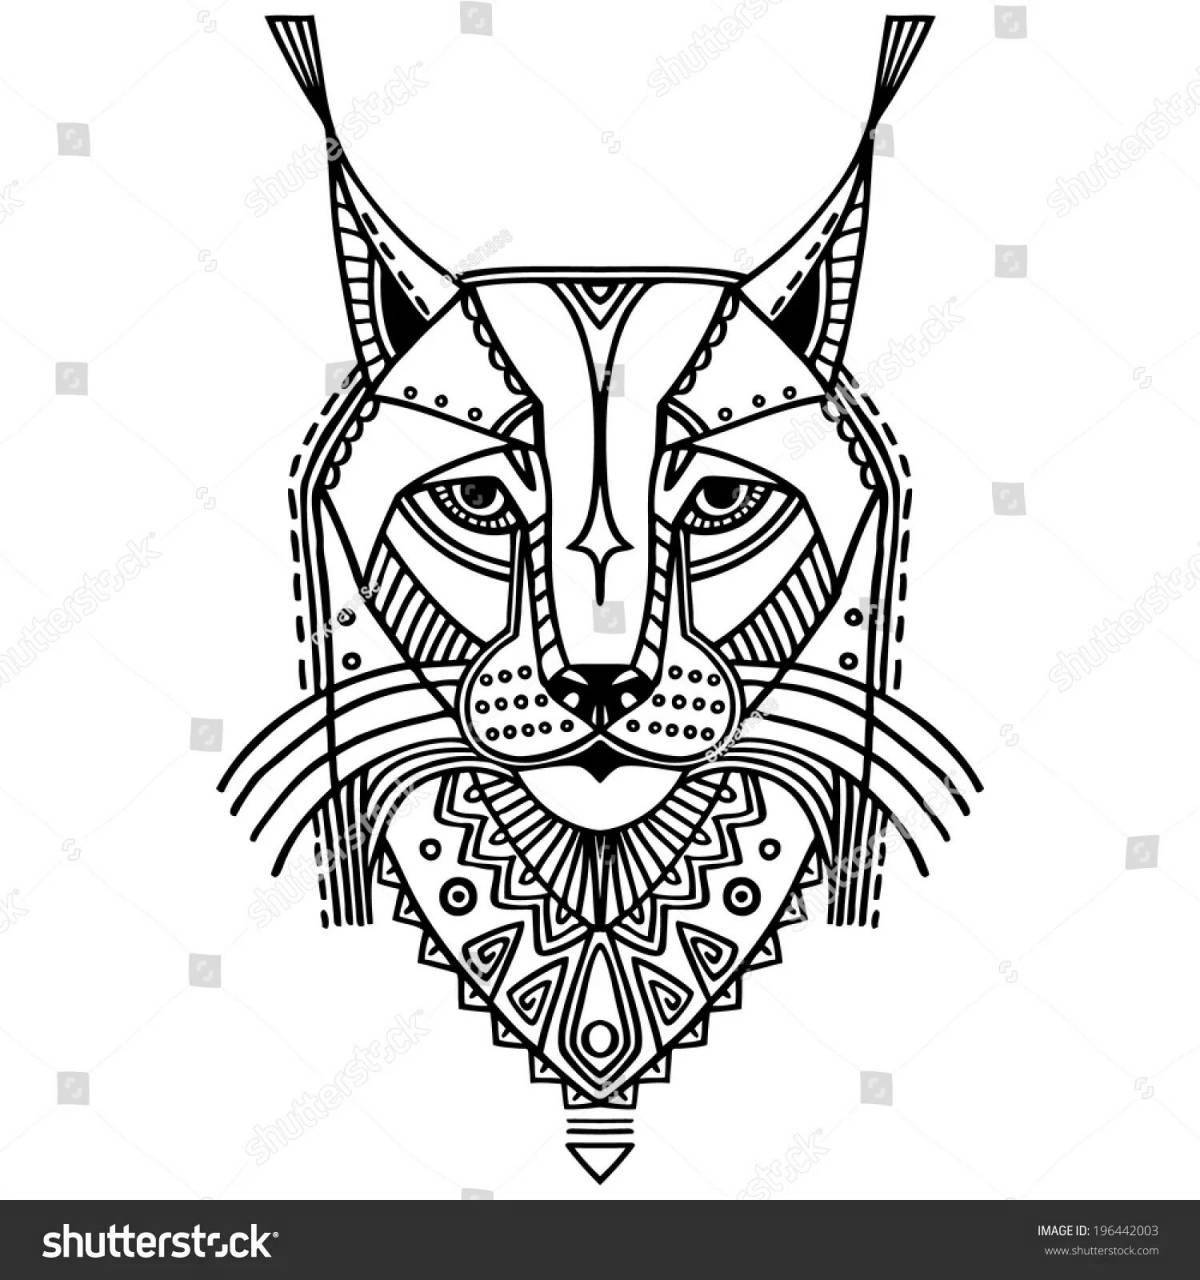 Mystical coloring antistress lynx